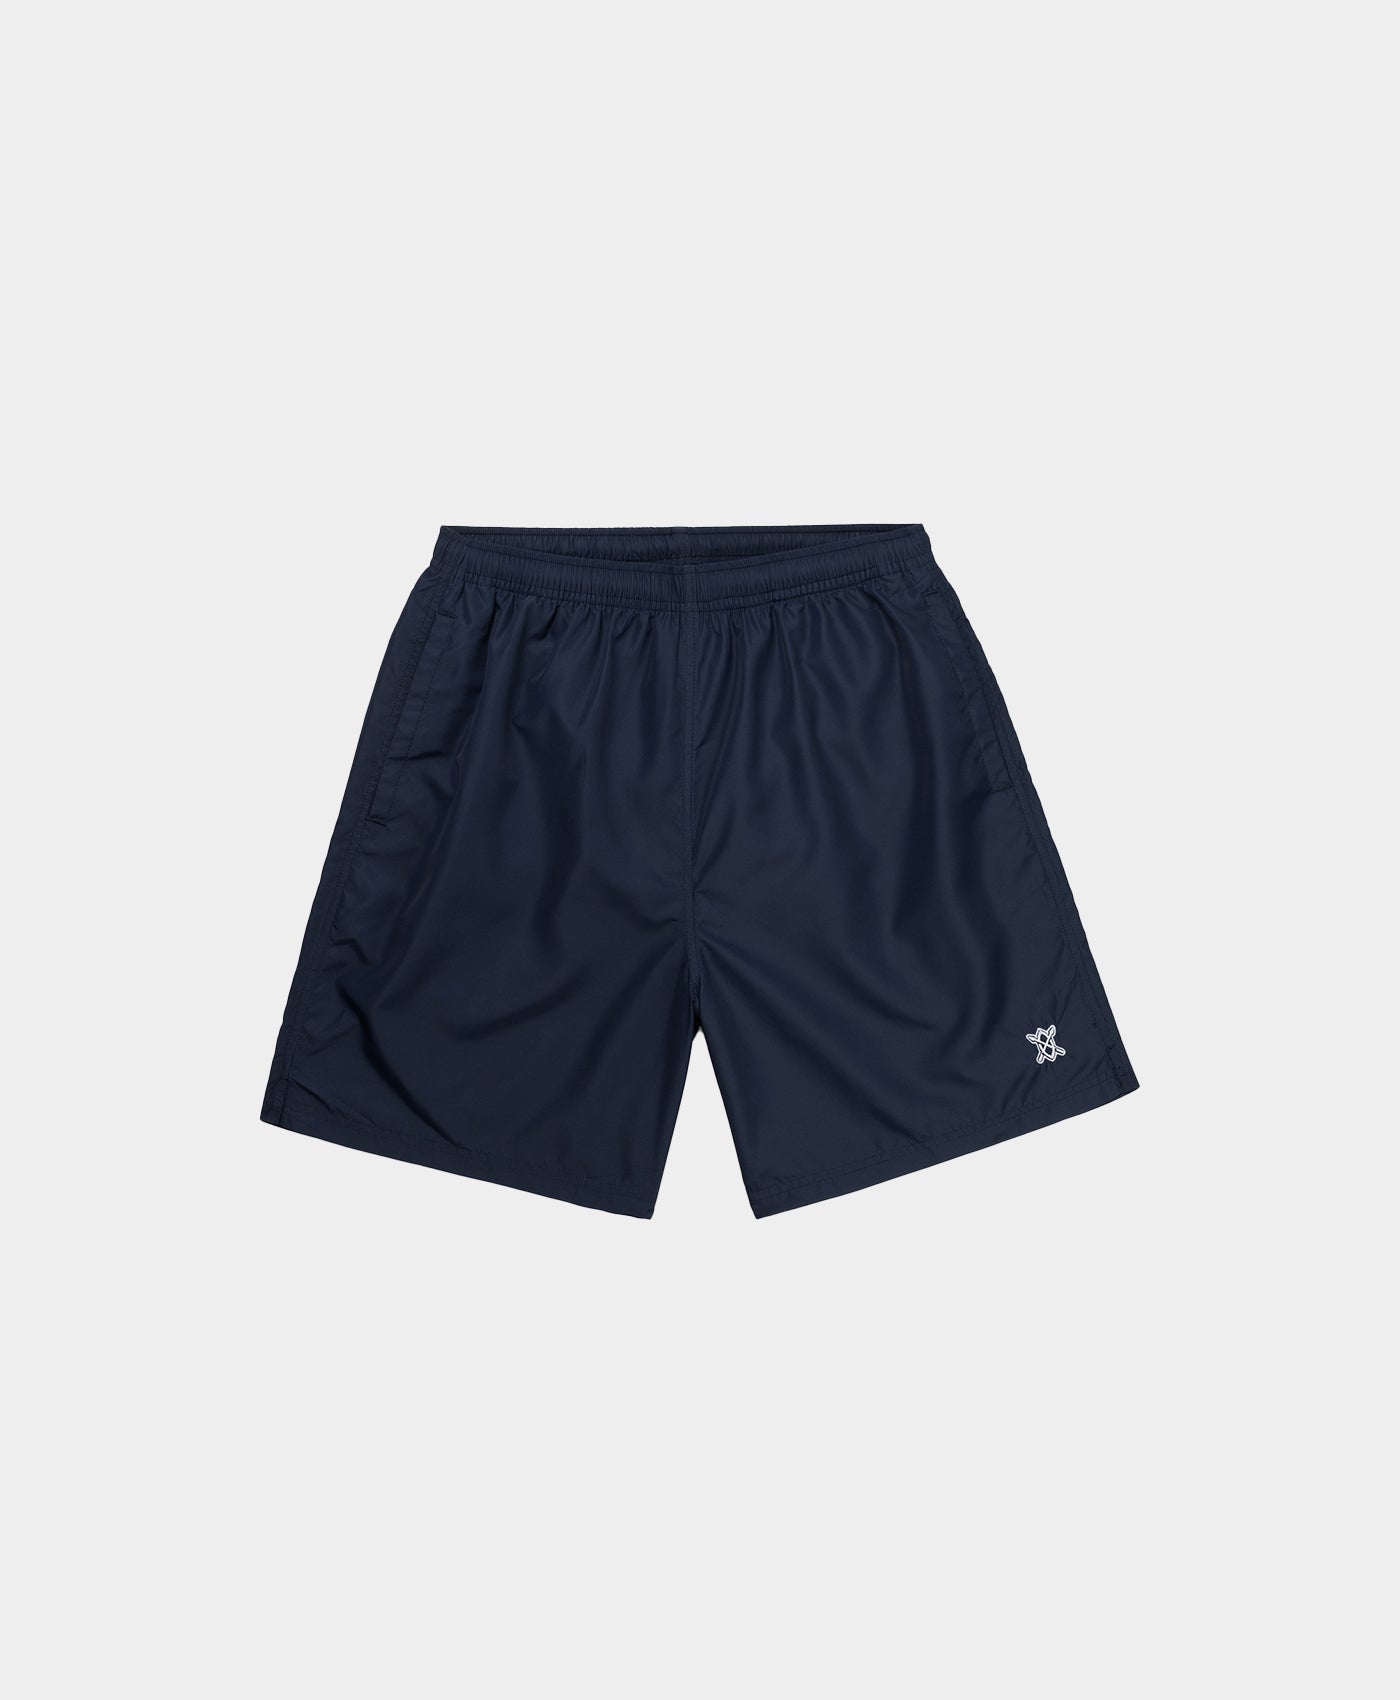 DP - Peacoat Navy Paden Swim Shorts - Packshot - Front